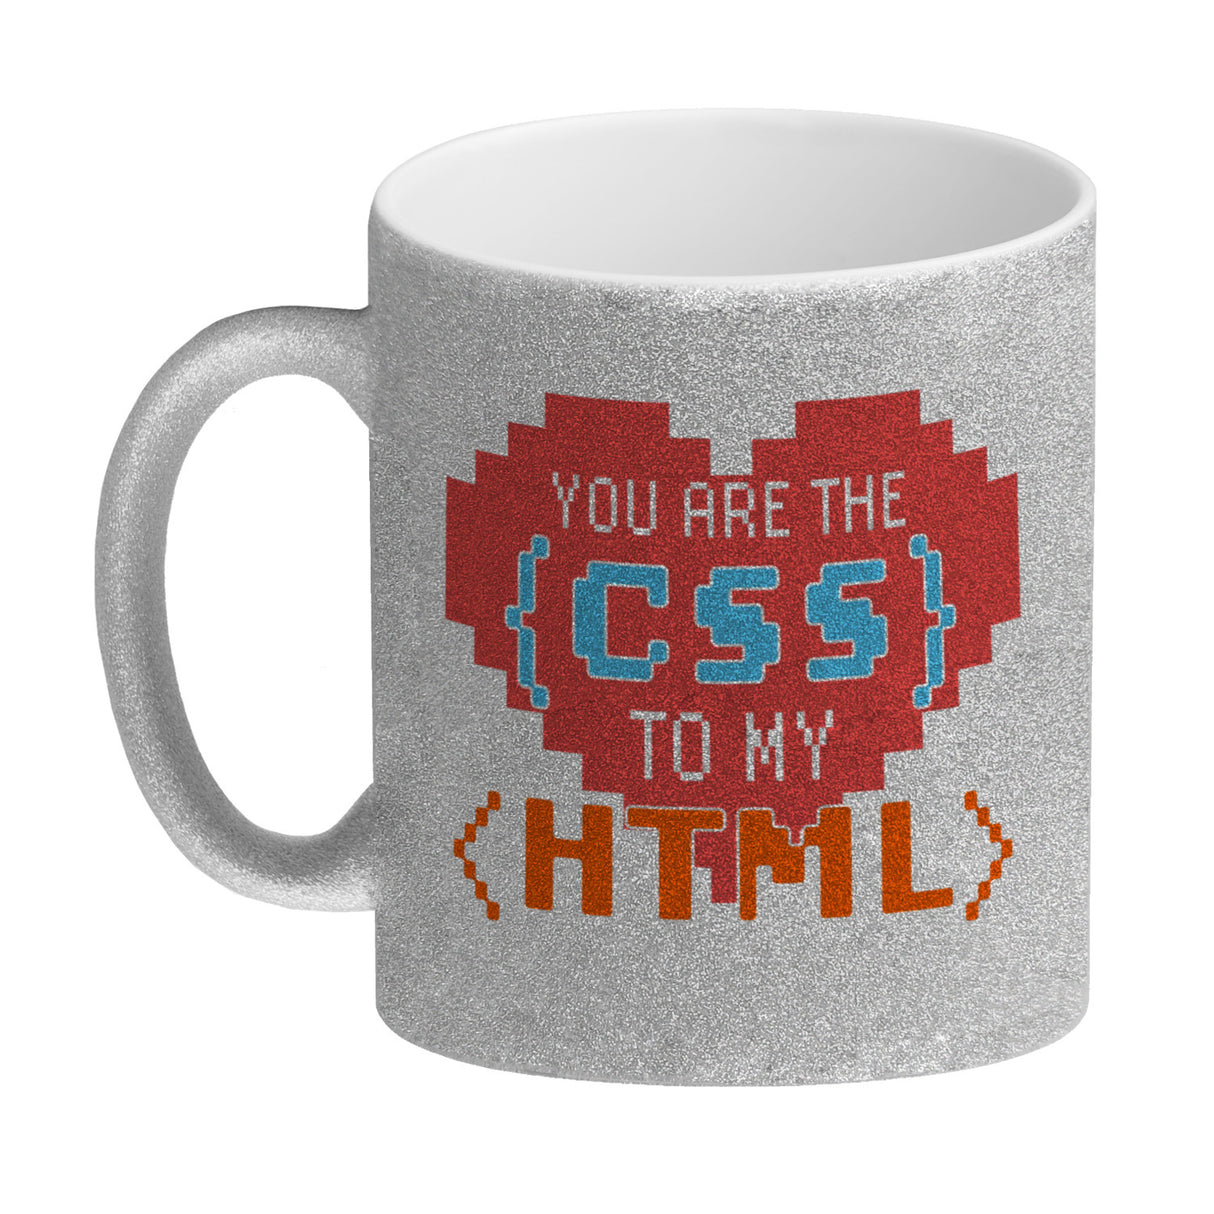 You are the CSS to my HTML Kaffeebecher für Webentwickler